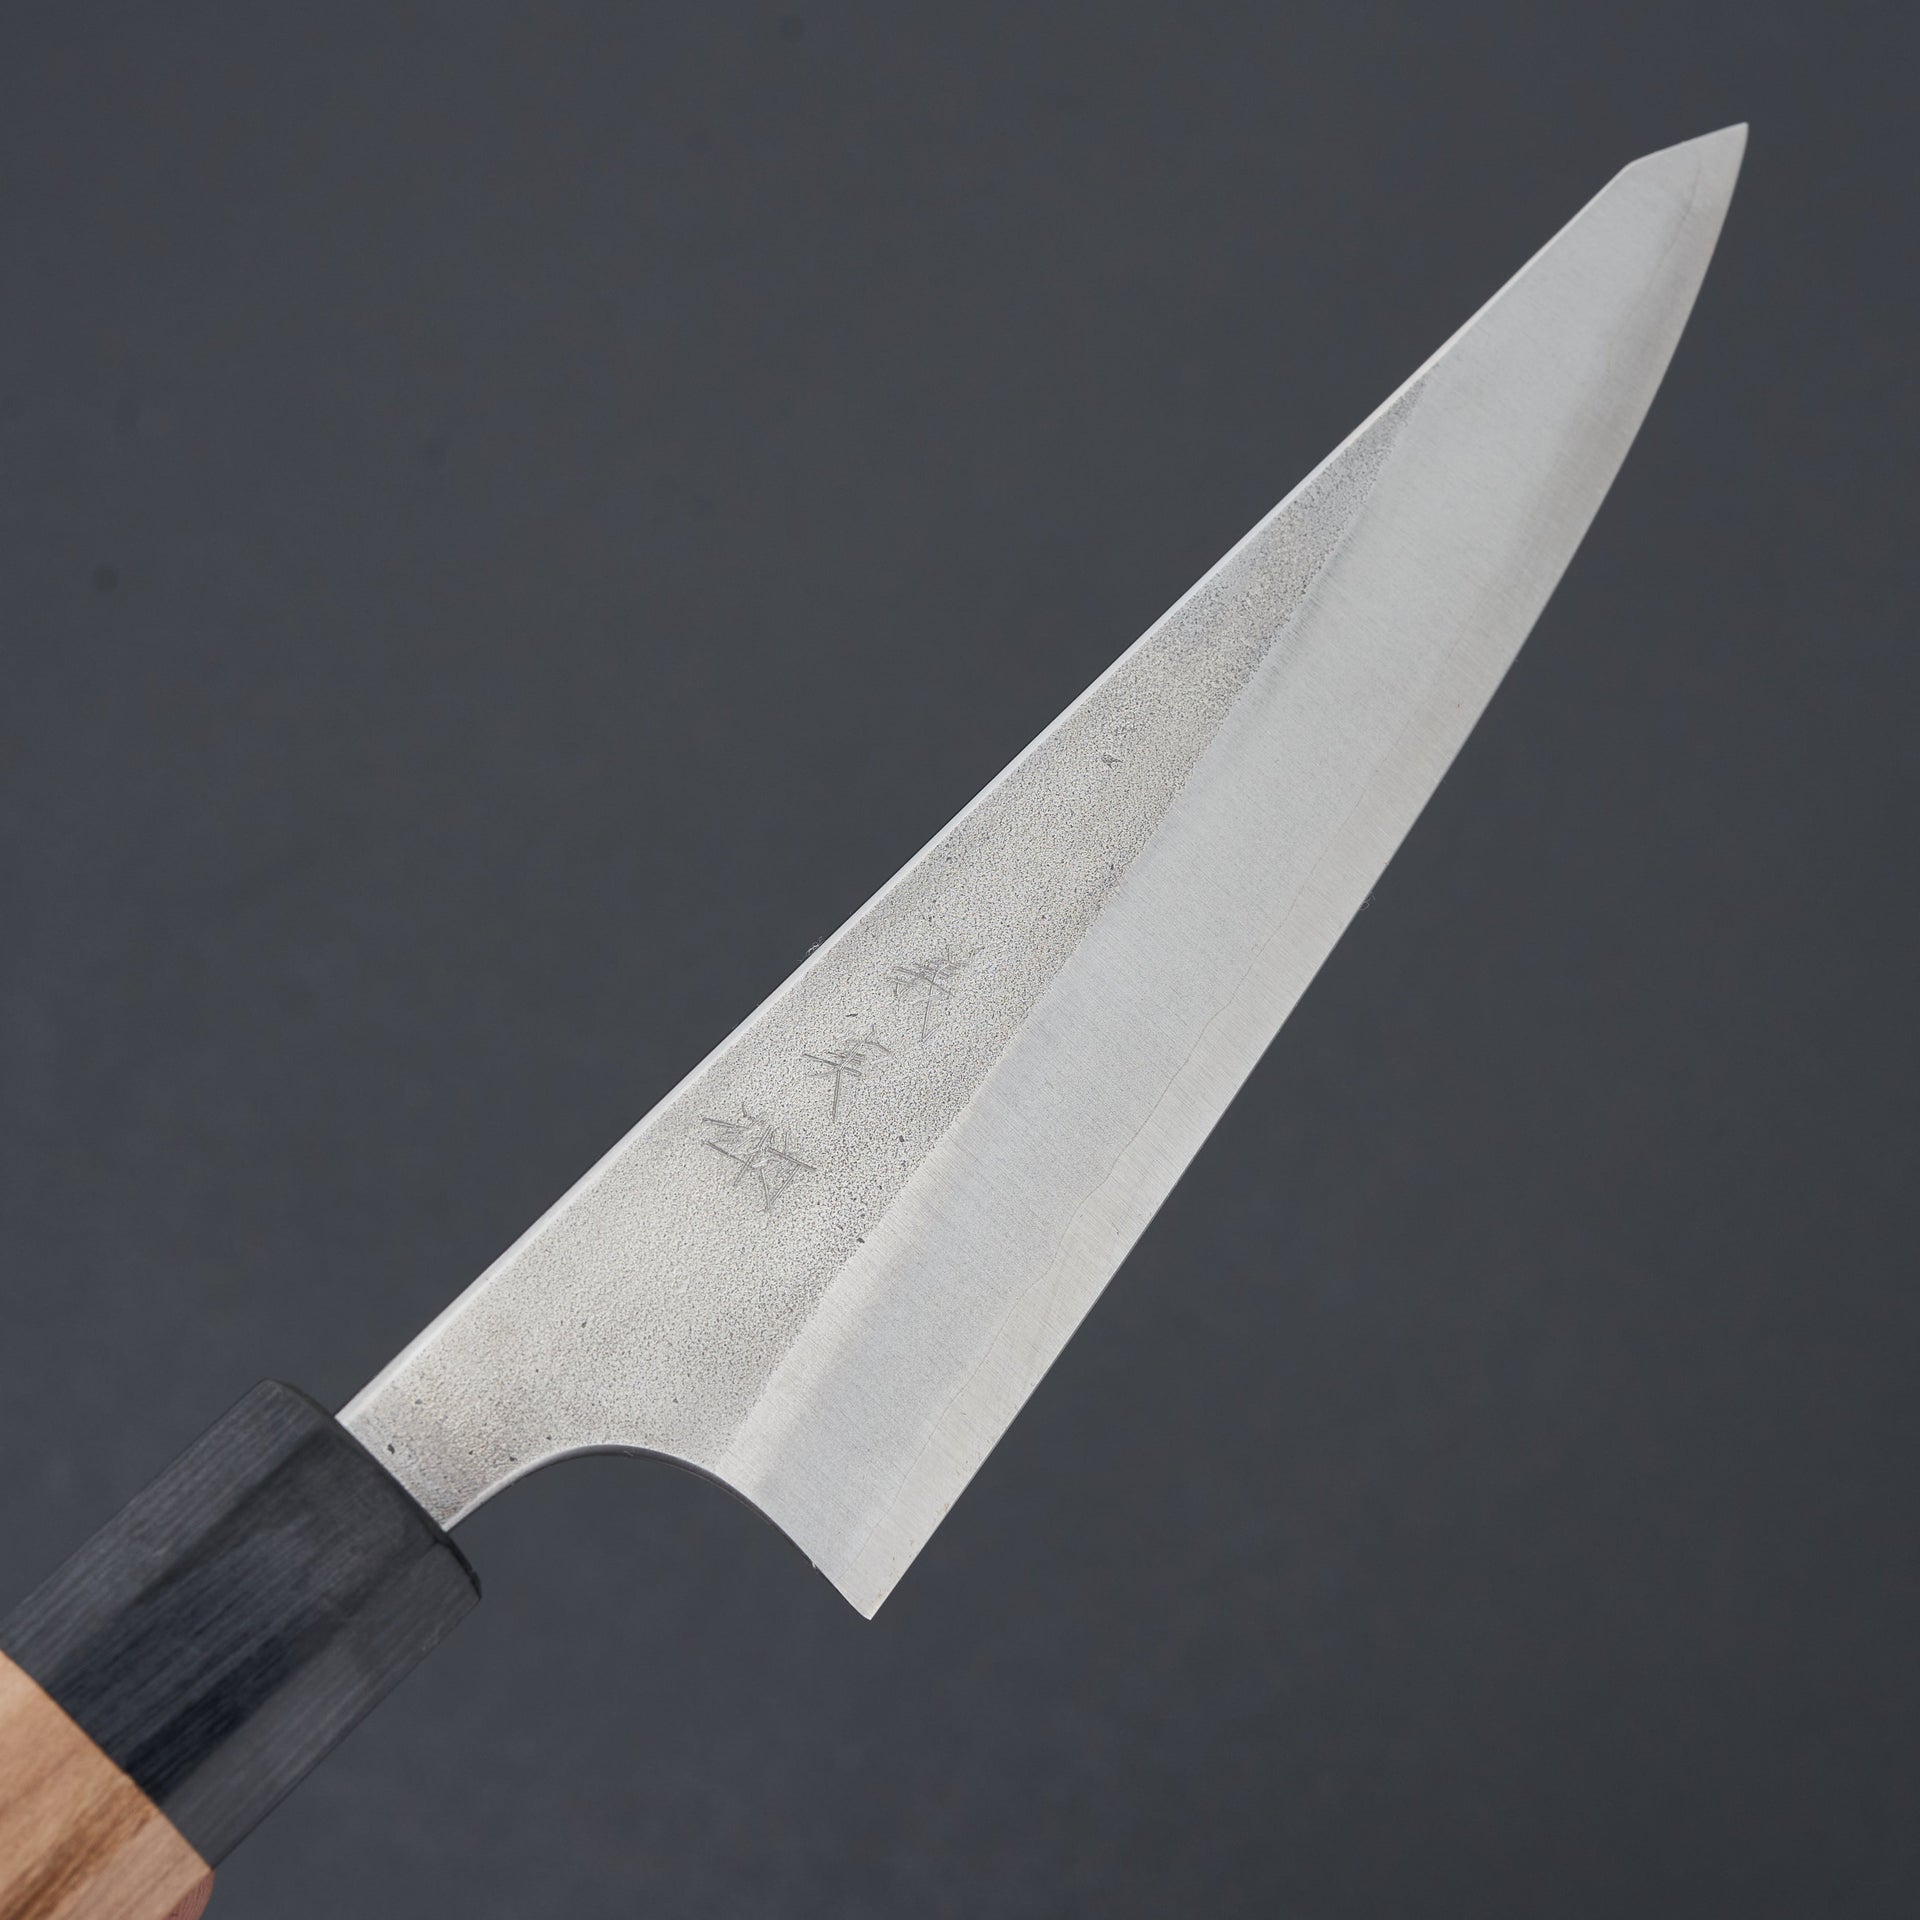 Kato AS Nashiji Cherry Handle Honesuki 150mm-Knife-Yoshimi Kato-Carbon Knife Co